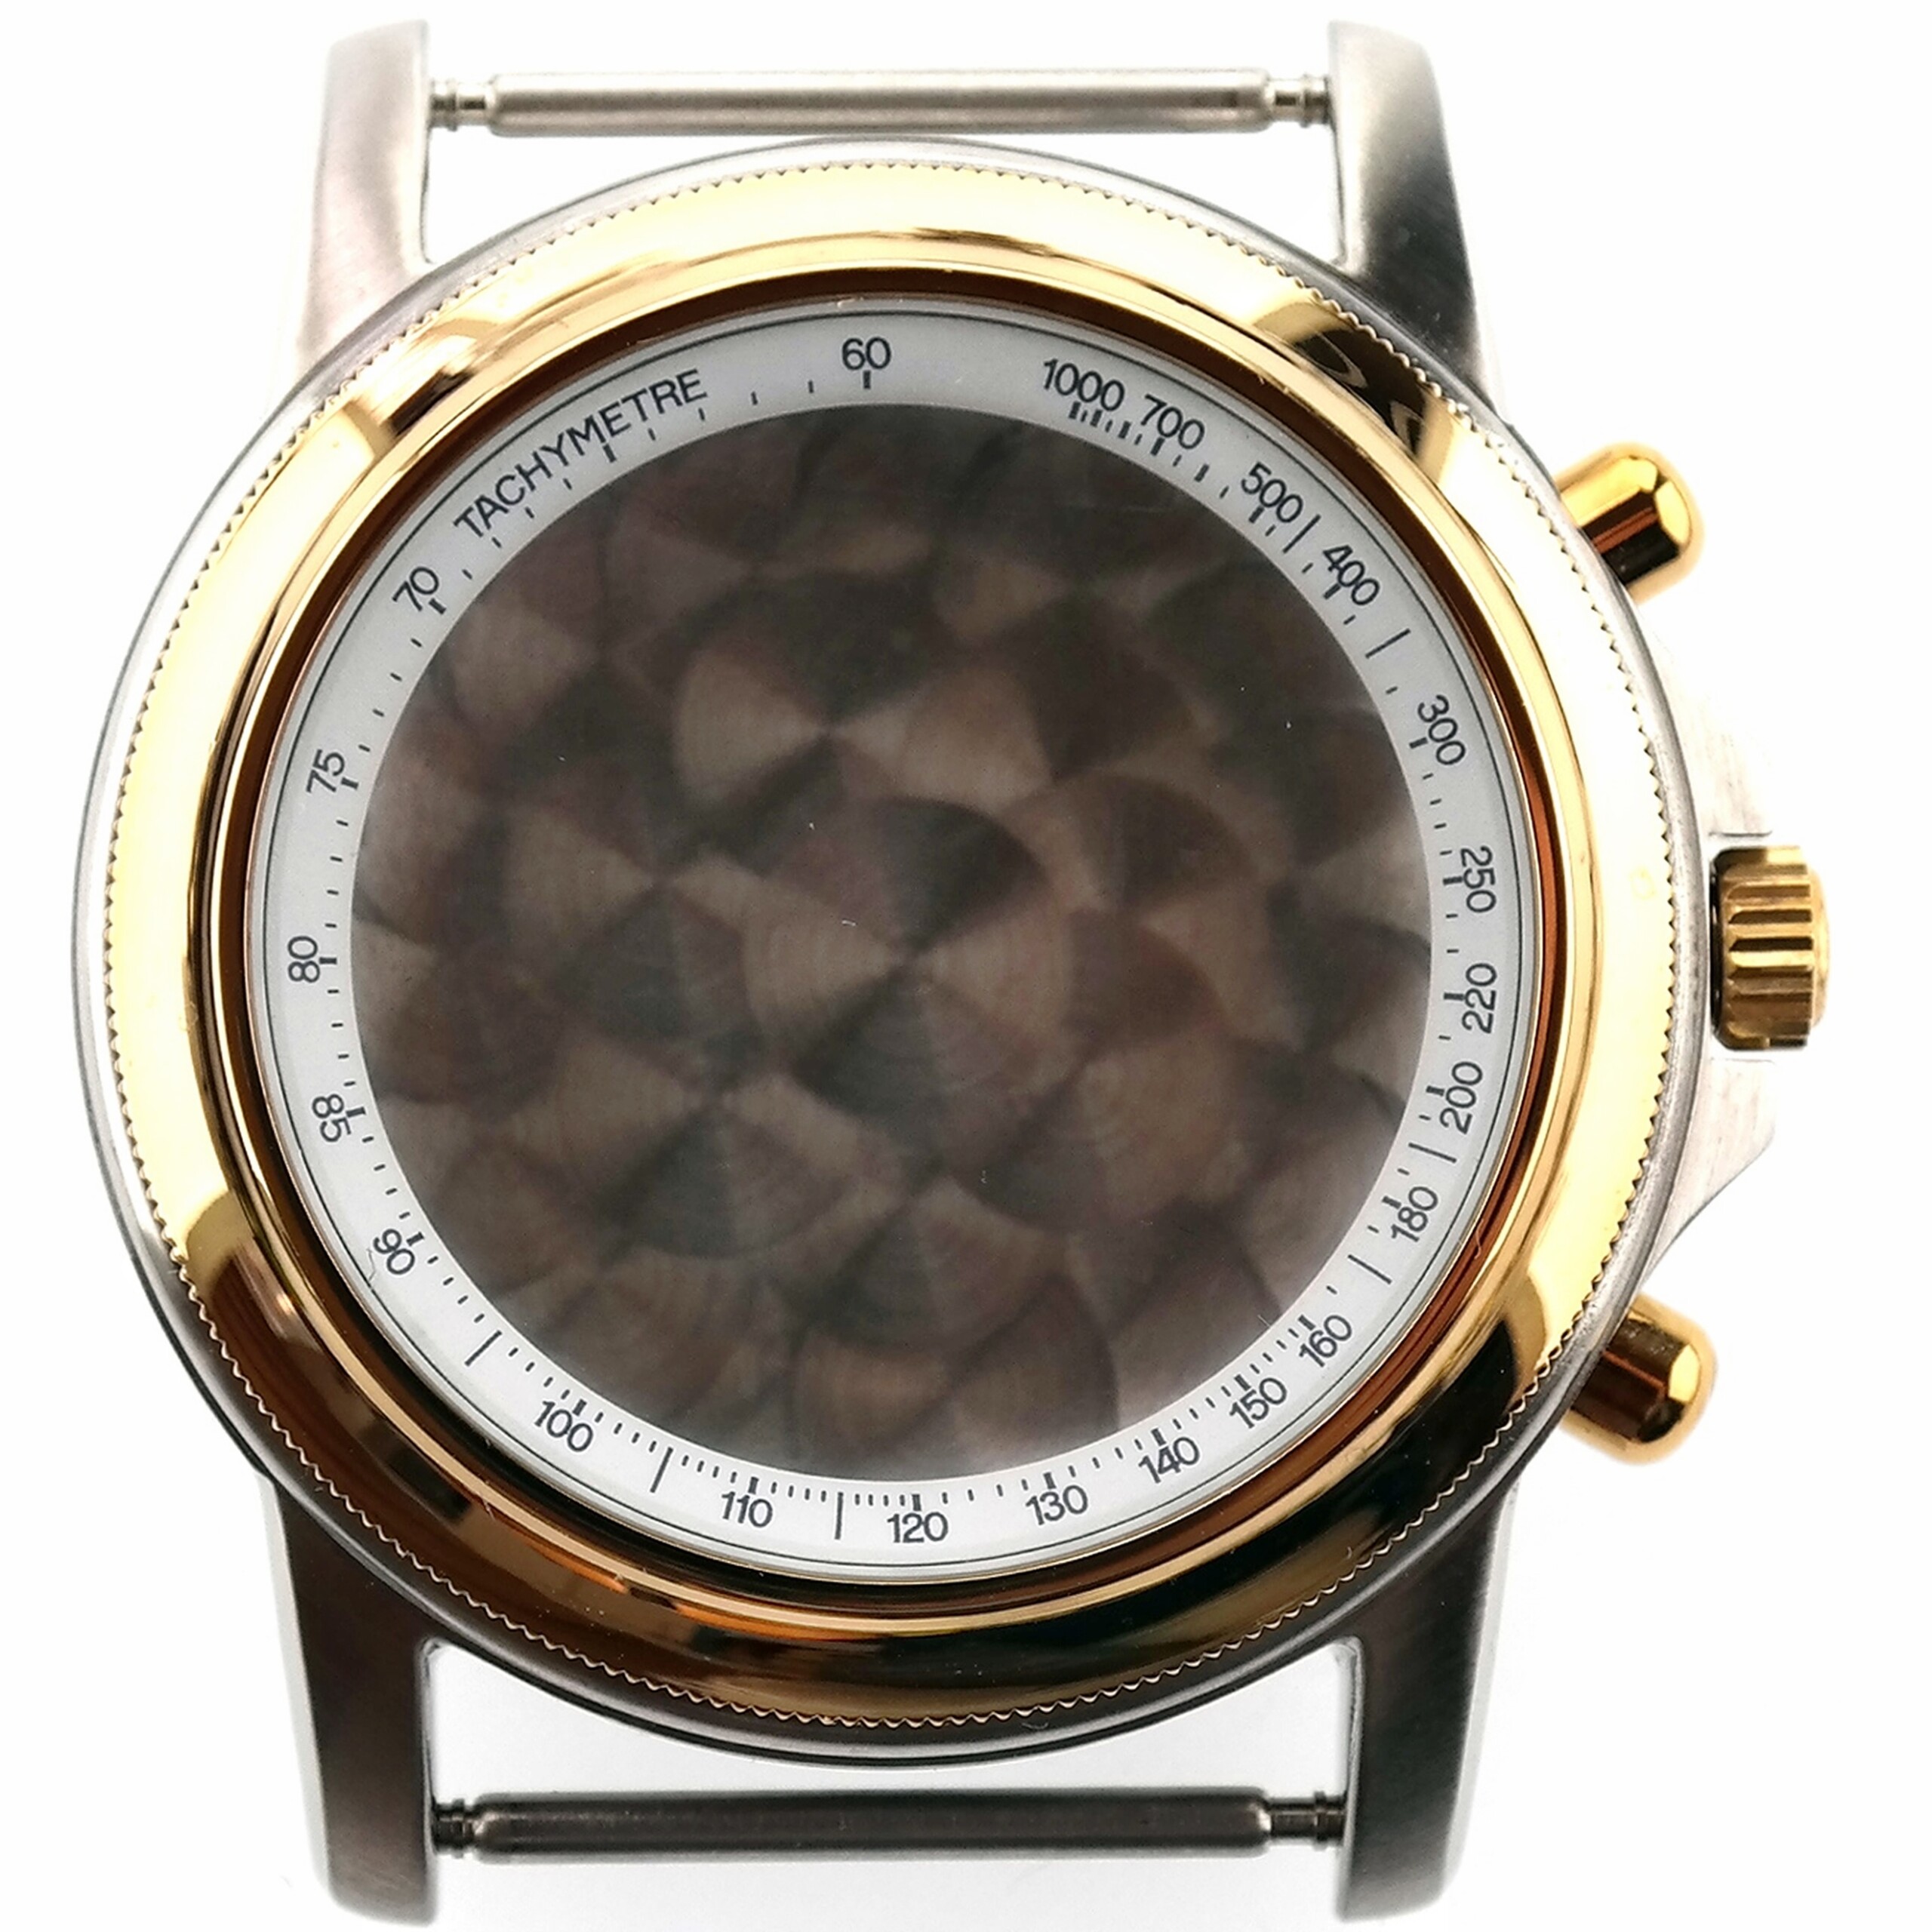 DuBois - Automatic Chronograph ETA/Valjoux 7750 Swiss Made Watch Case